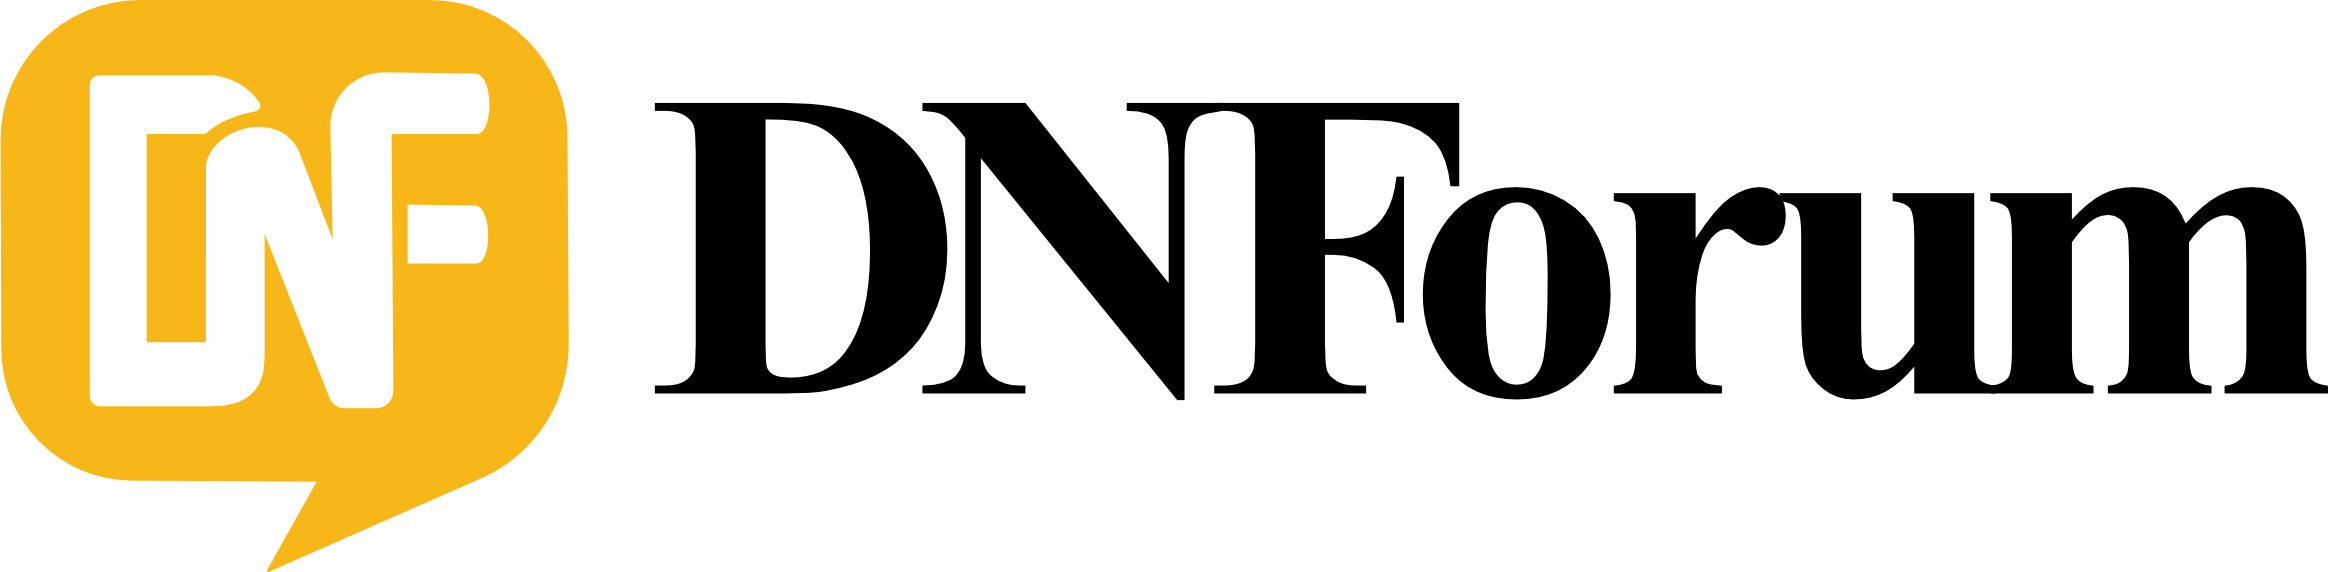 Acorn Domains logo